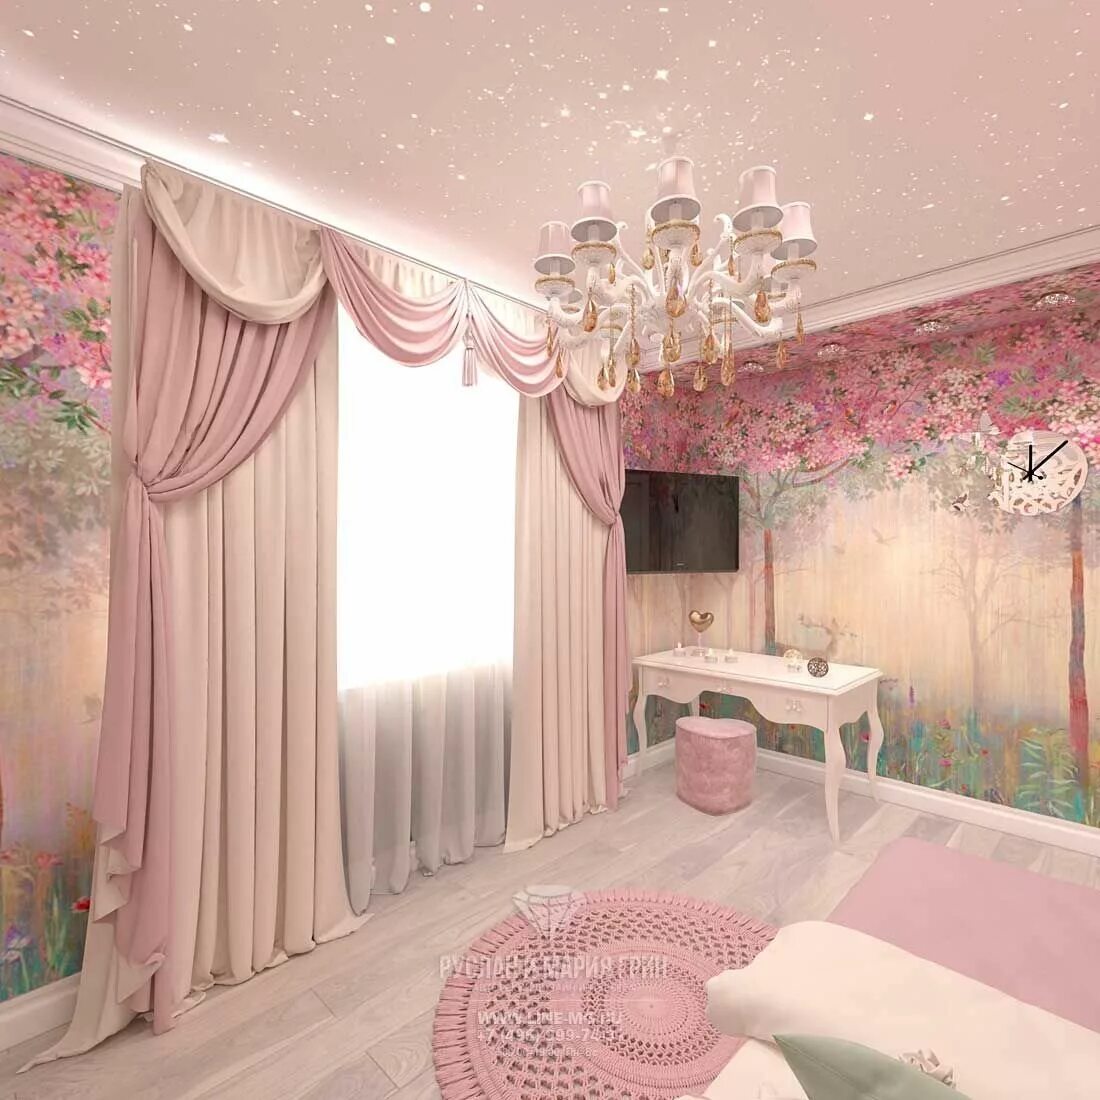 Комната в розовых тонах. Комната для девочки. Спальня для девочки в розовых тонах. Спальня в розовых тонах. Детские комнаты для девочек.